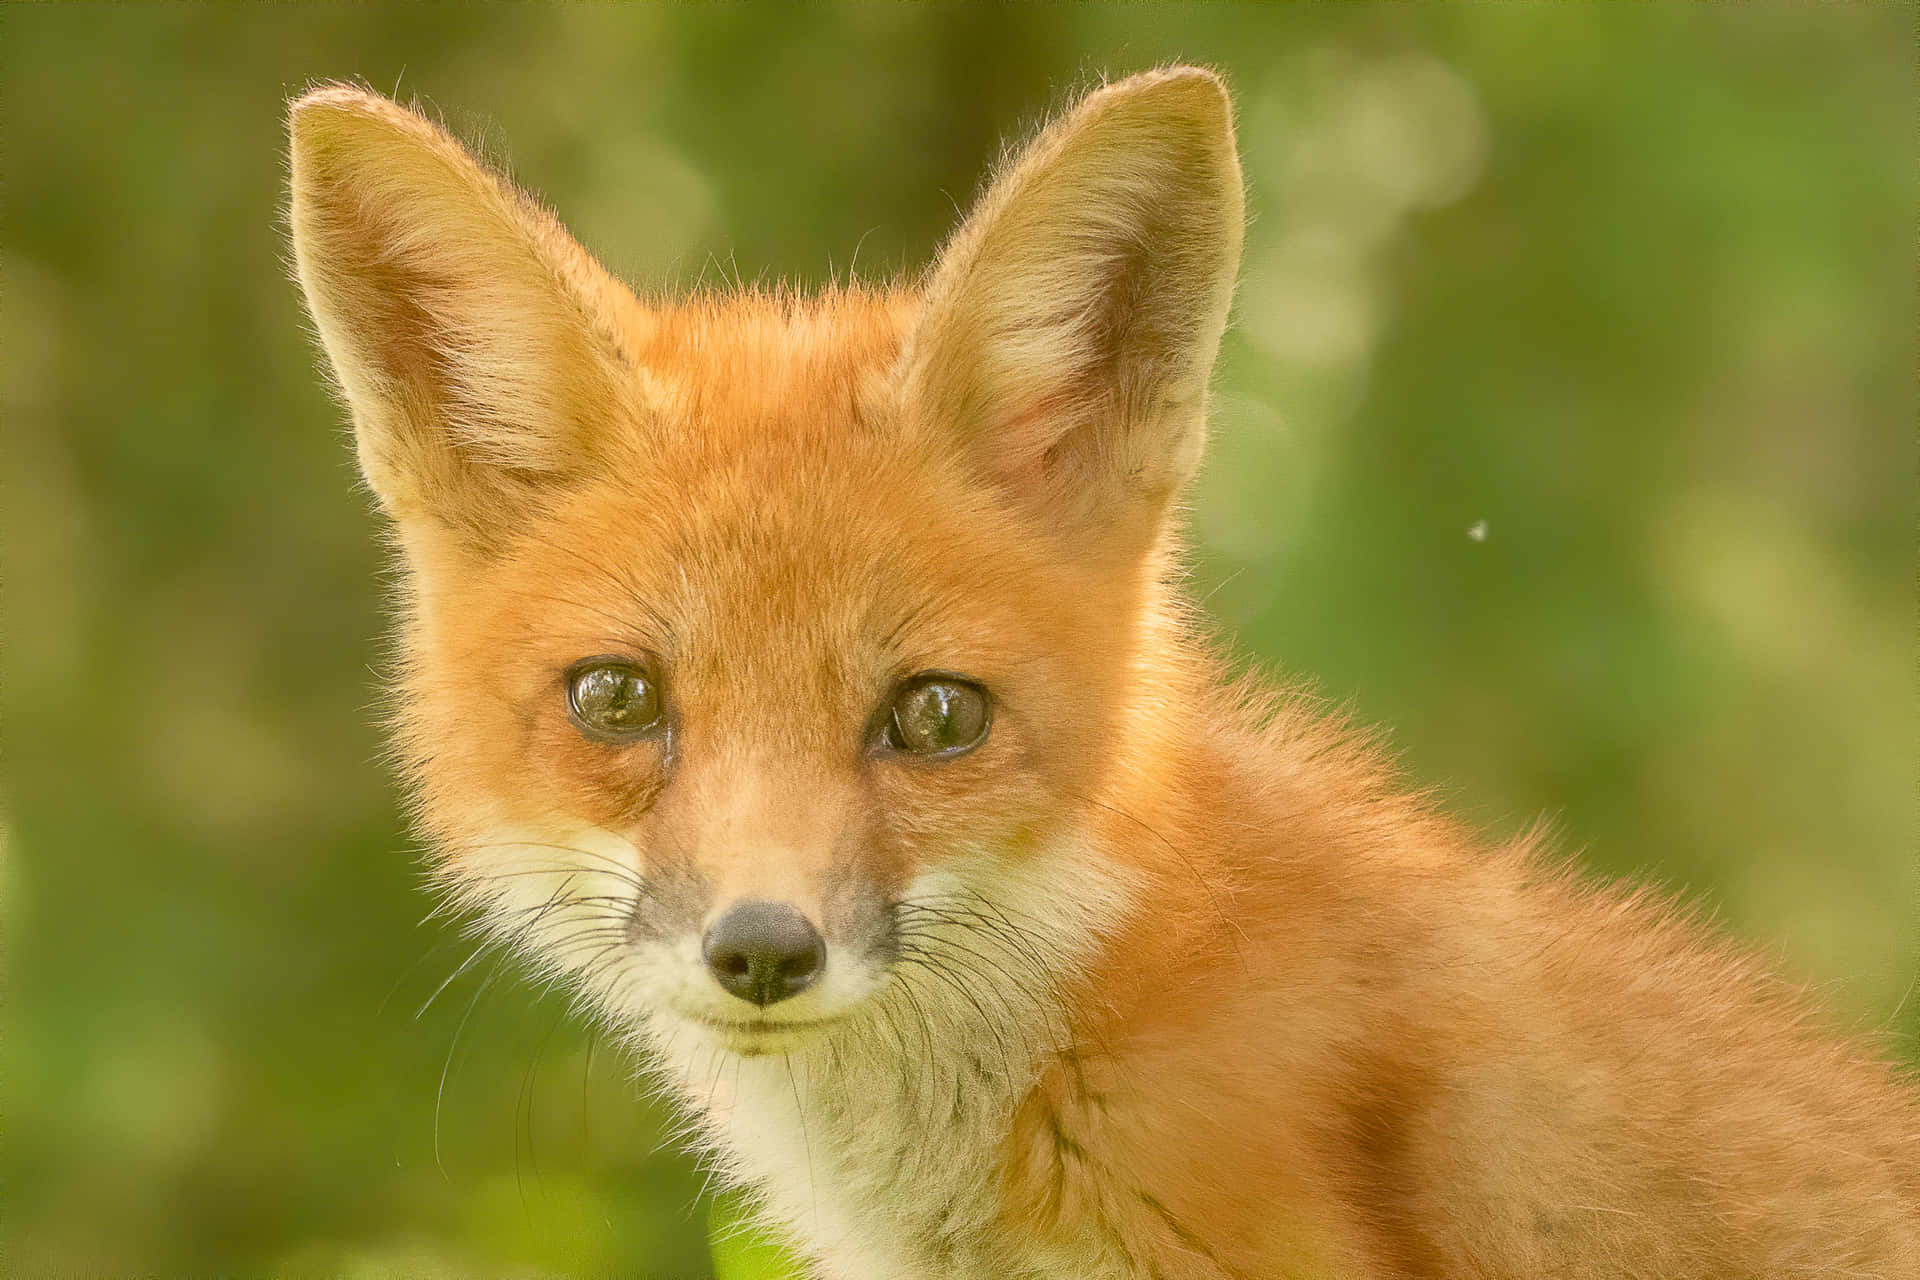 An alert fox looking for prey